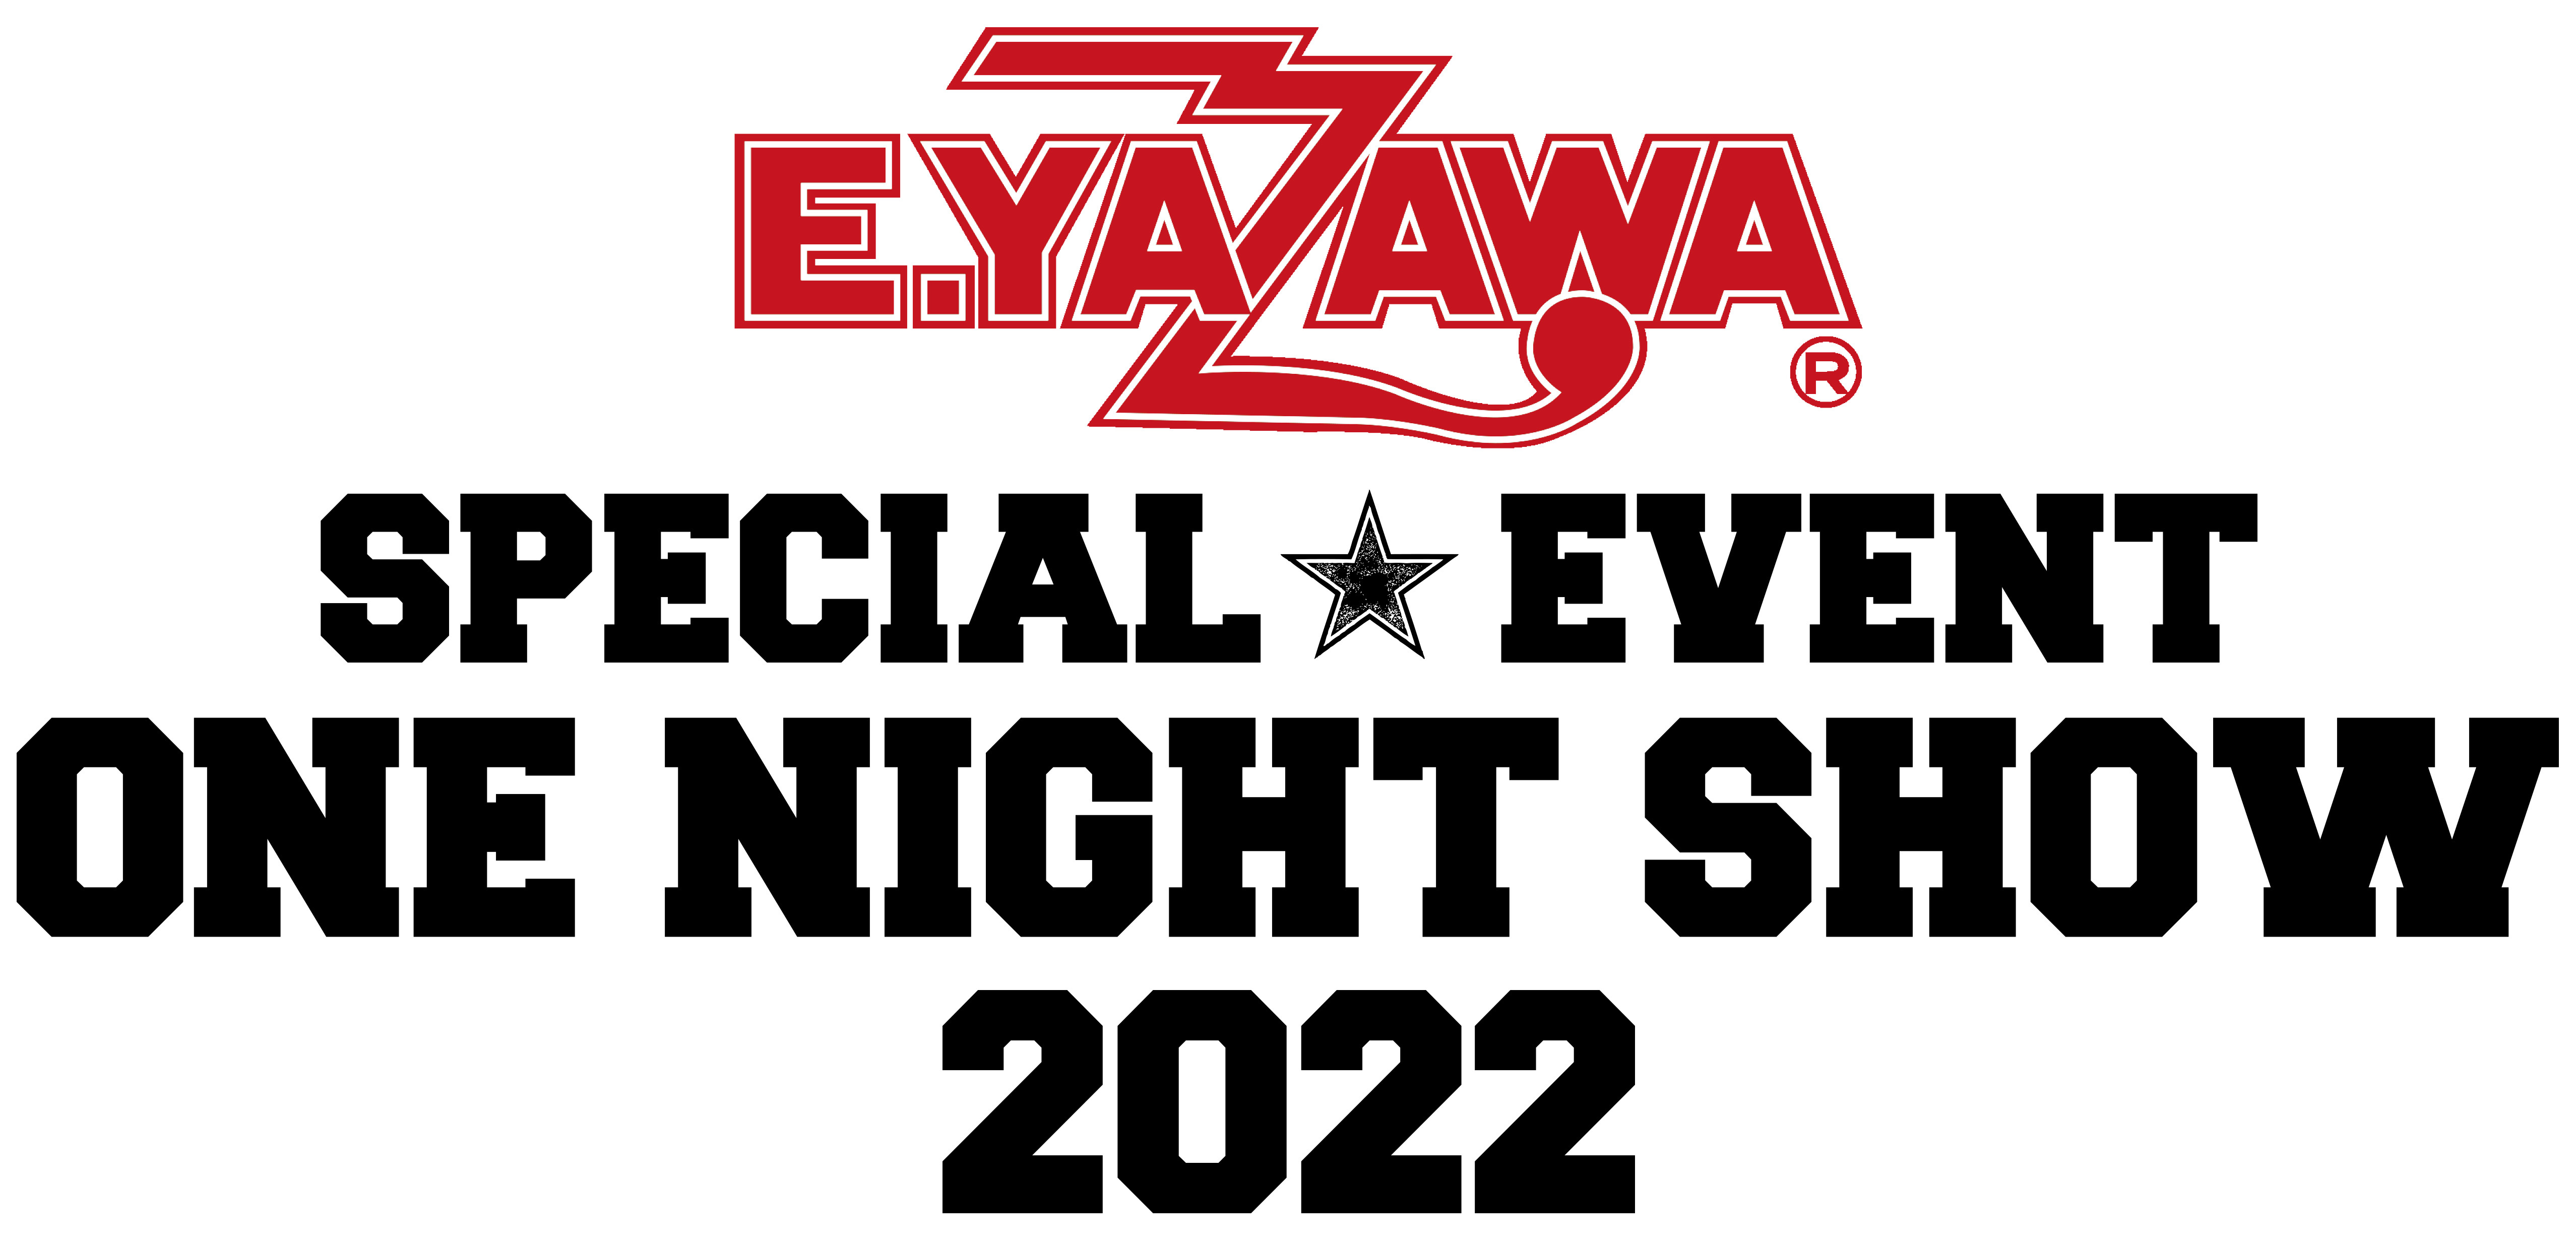 『E.YAZAWA SPECIAL EVENT ONE NIGHT SHOW 2022』メインロゴ